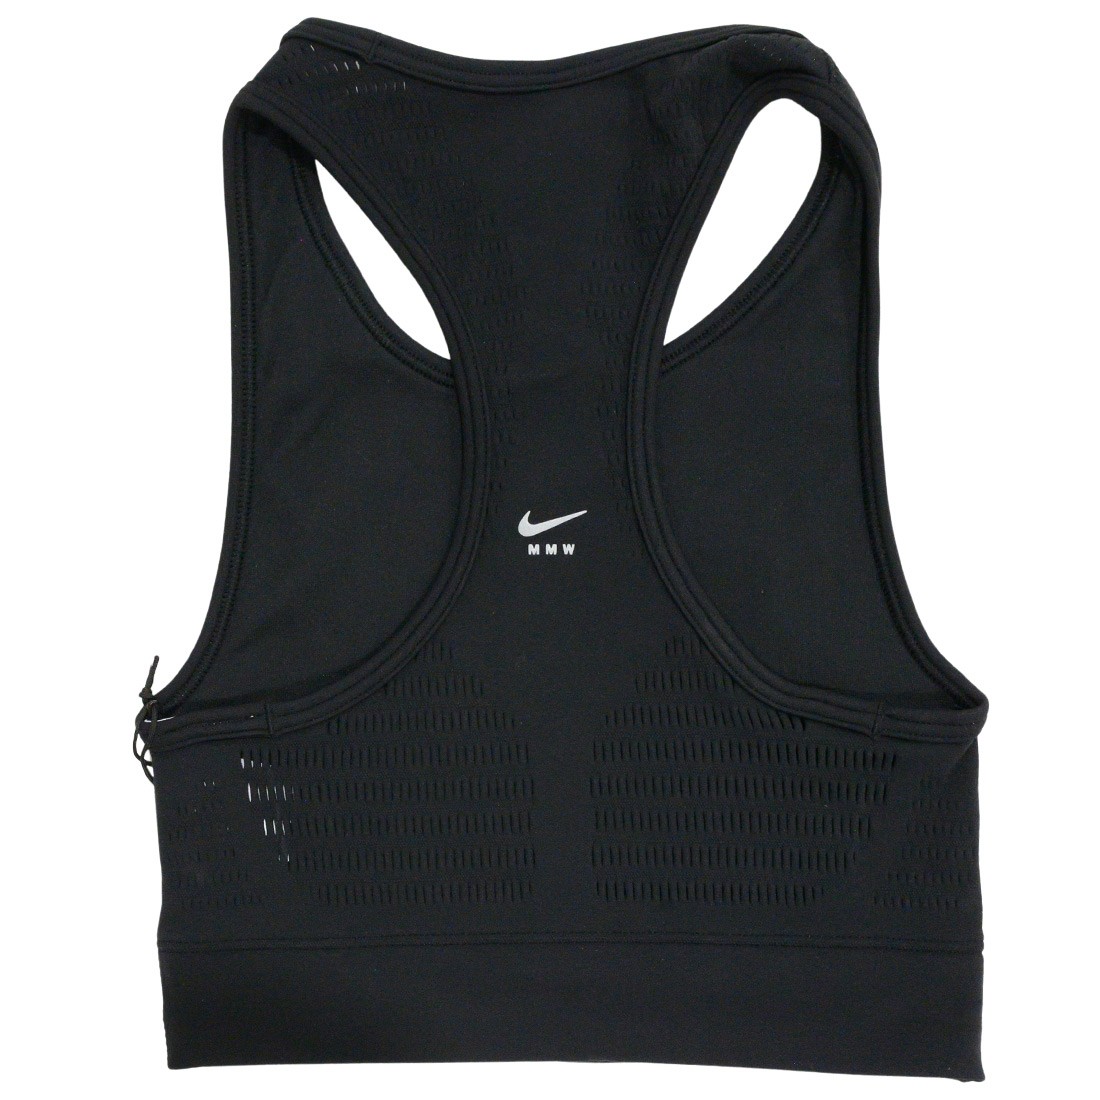 Nike - Black Nike Sport Bra on Designer Wardrobe